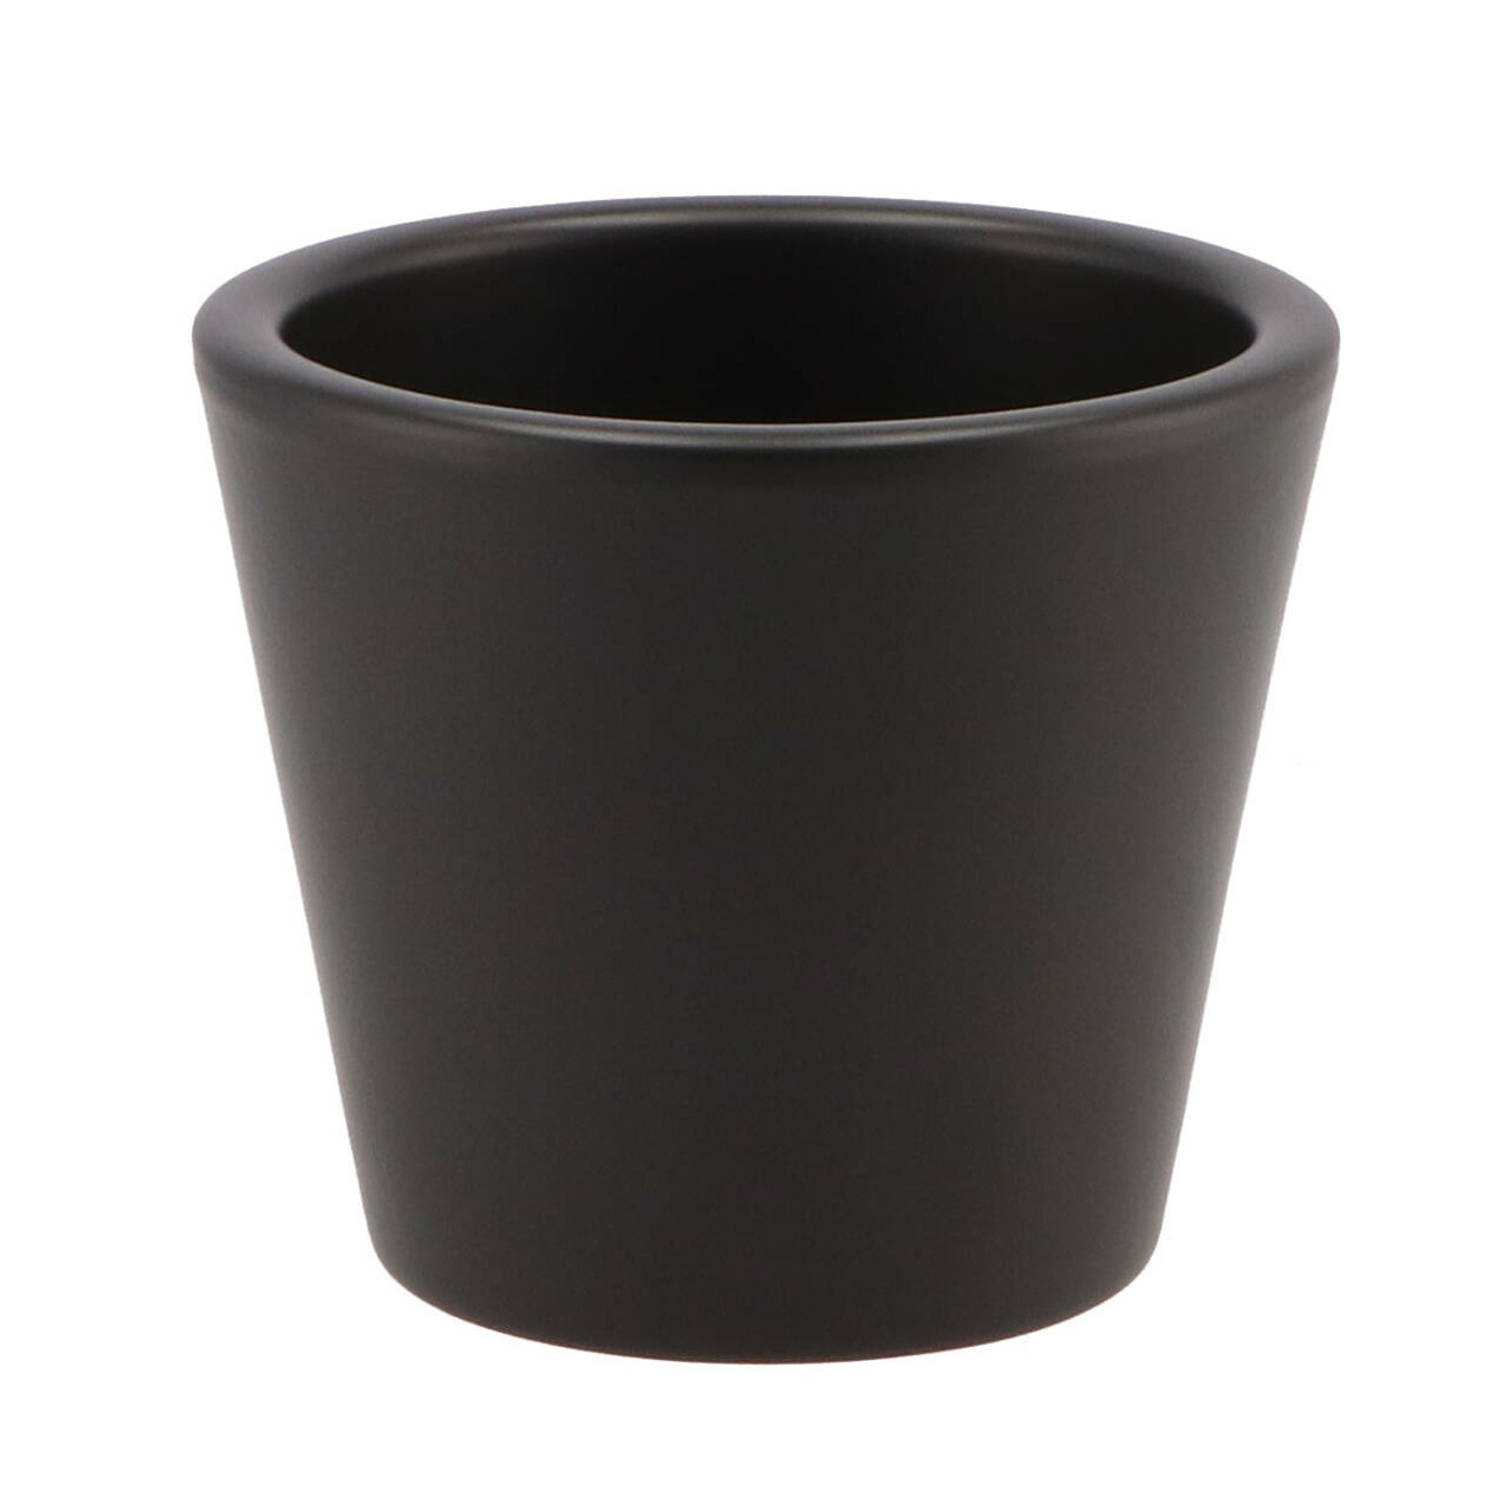 DK Design bloempot/plantenpot - Vinci - zwart mat - voor kamerplant - D10 x H12 cm - Plantenpotten